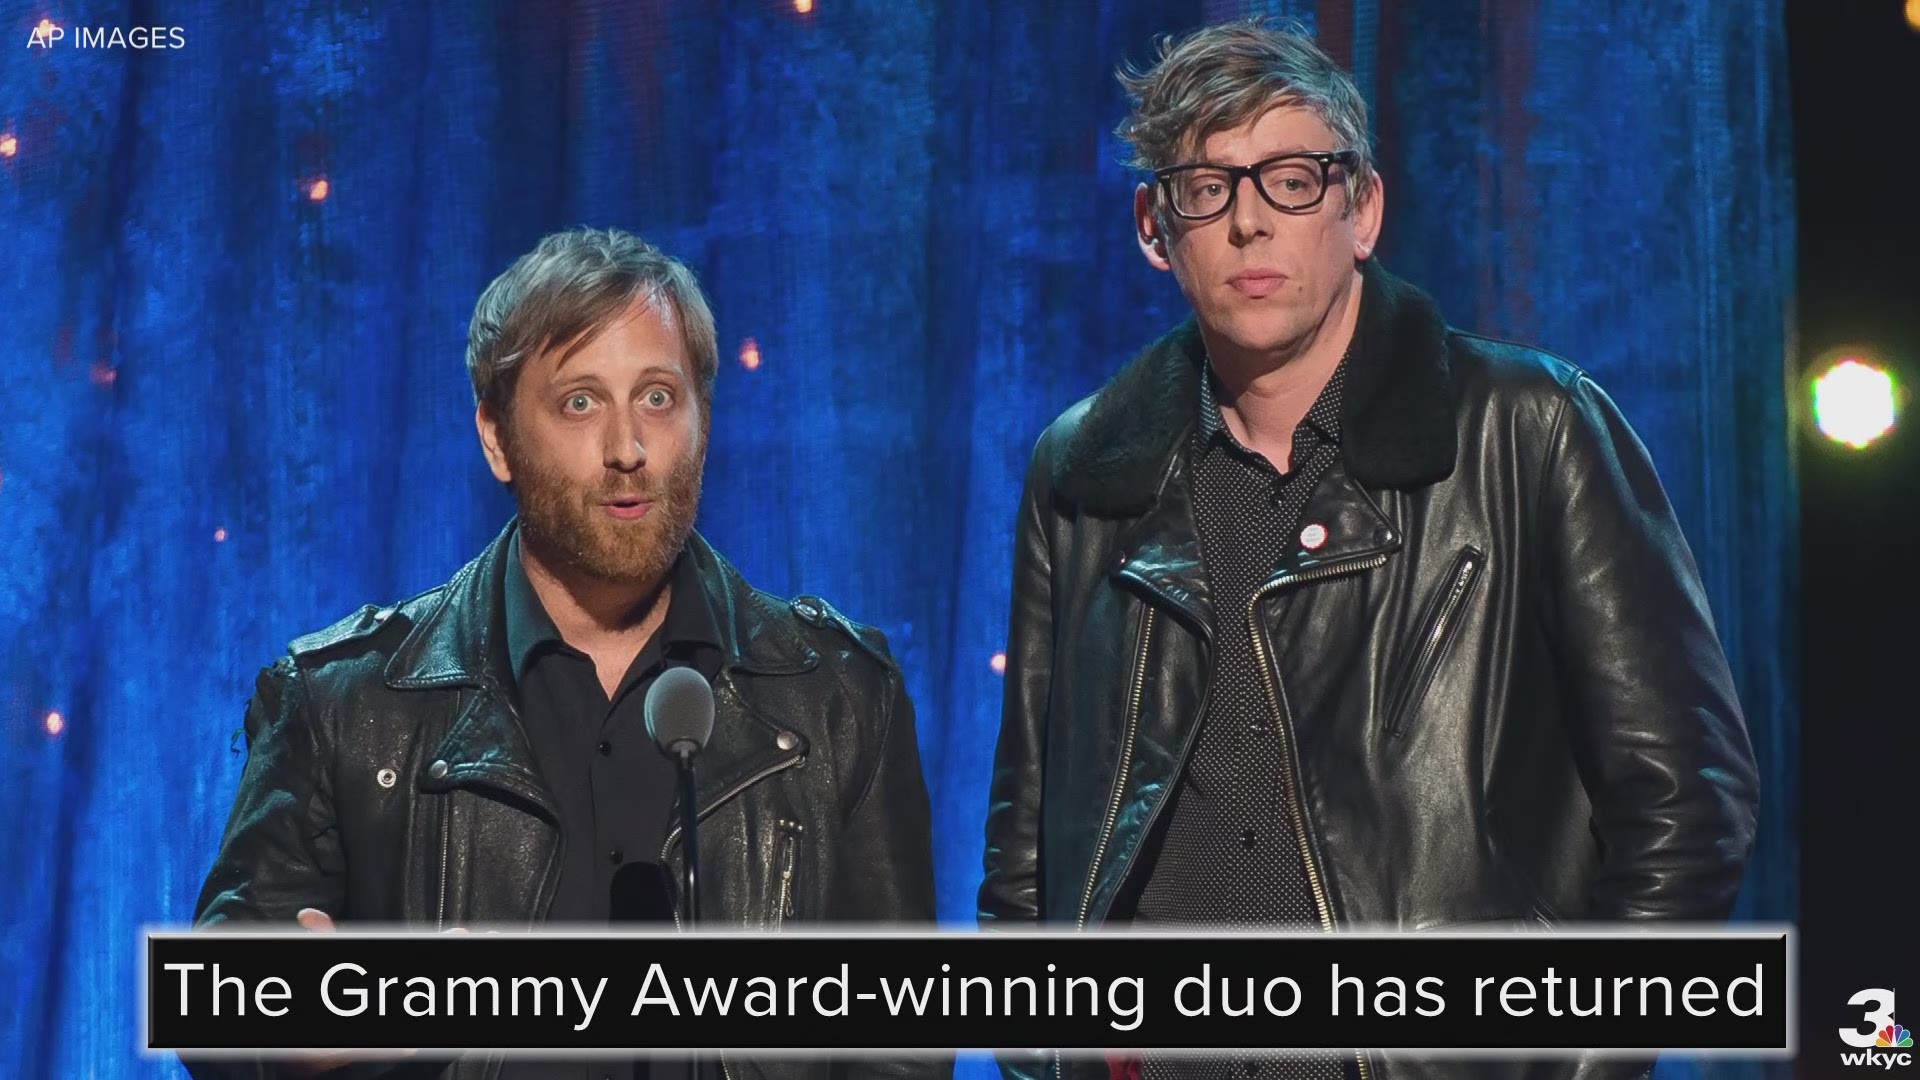 The Grammy Award-winning duo has returned.